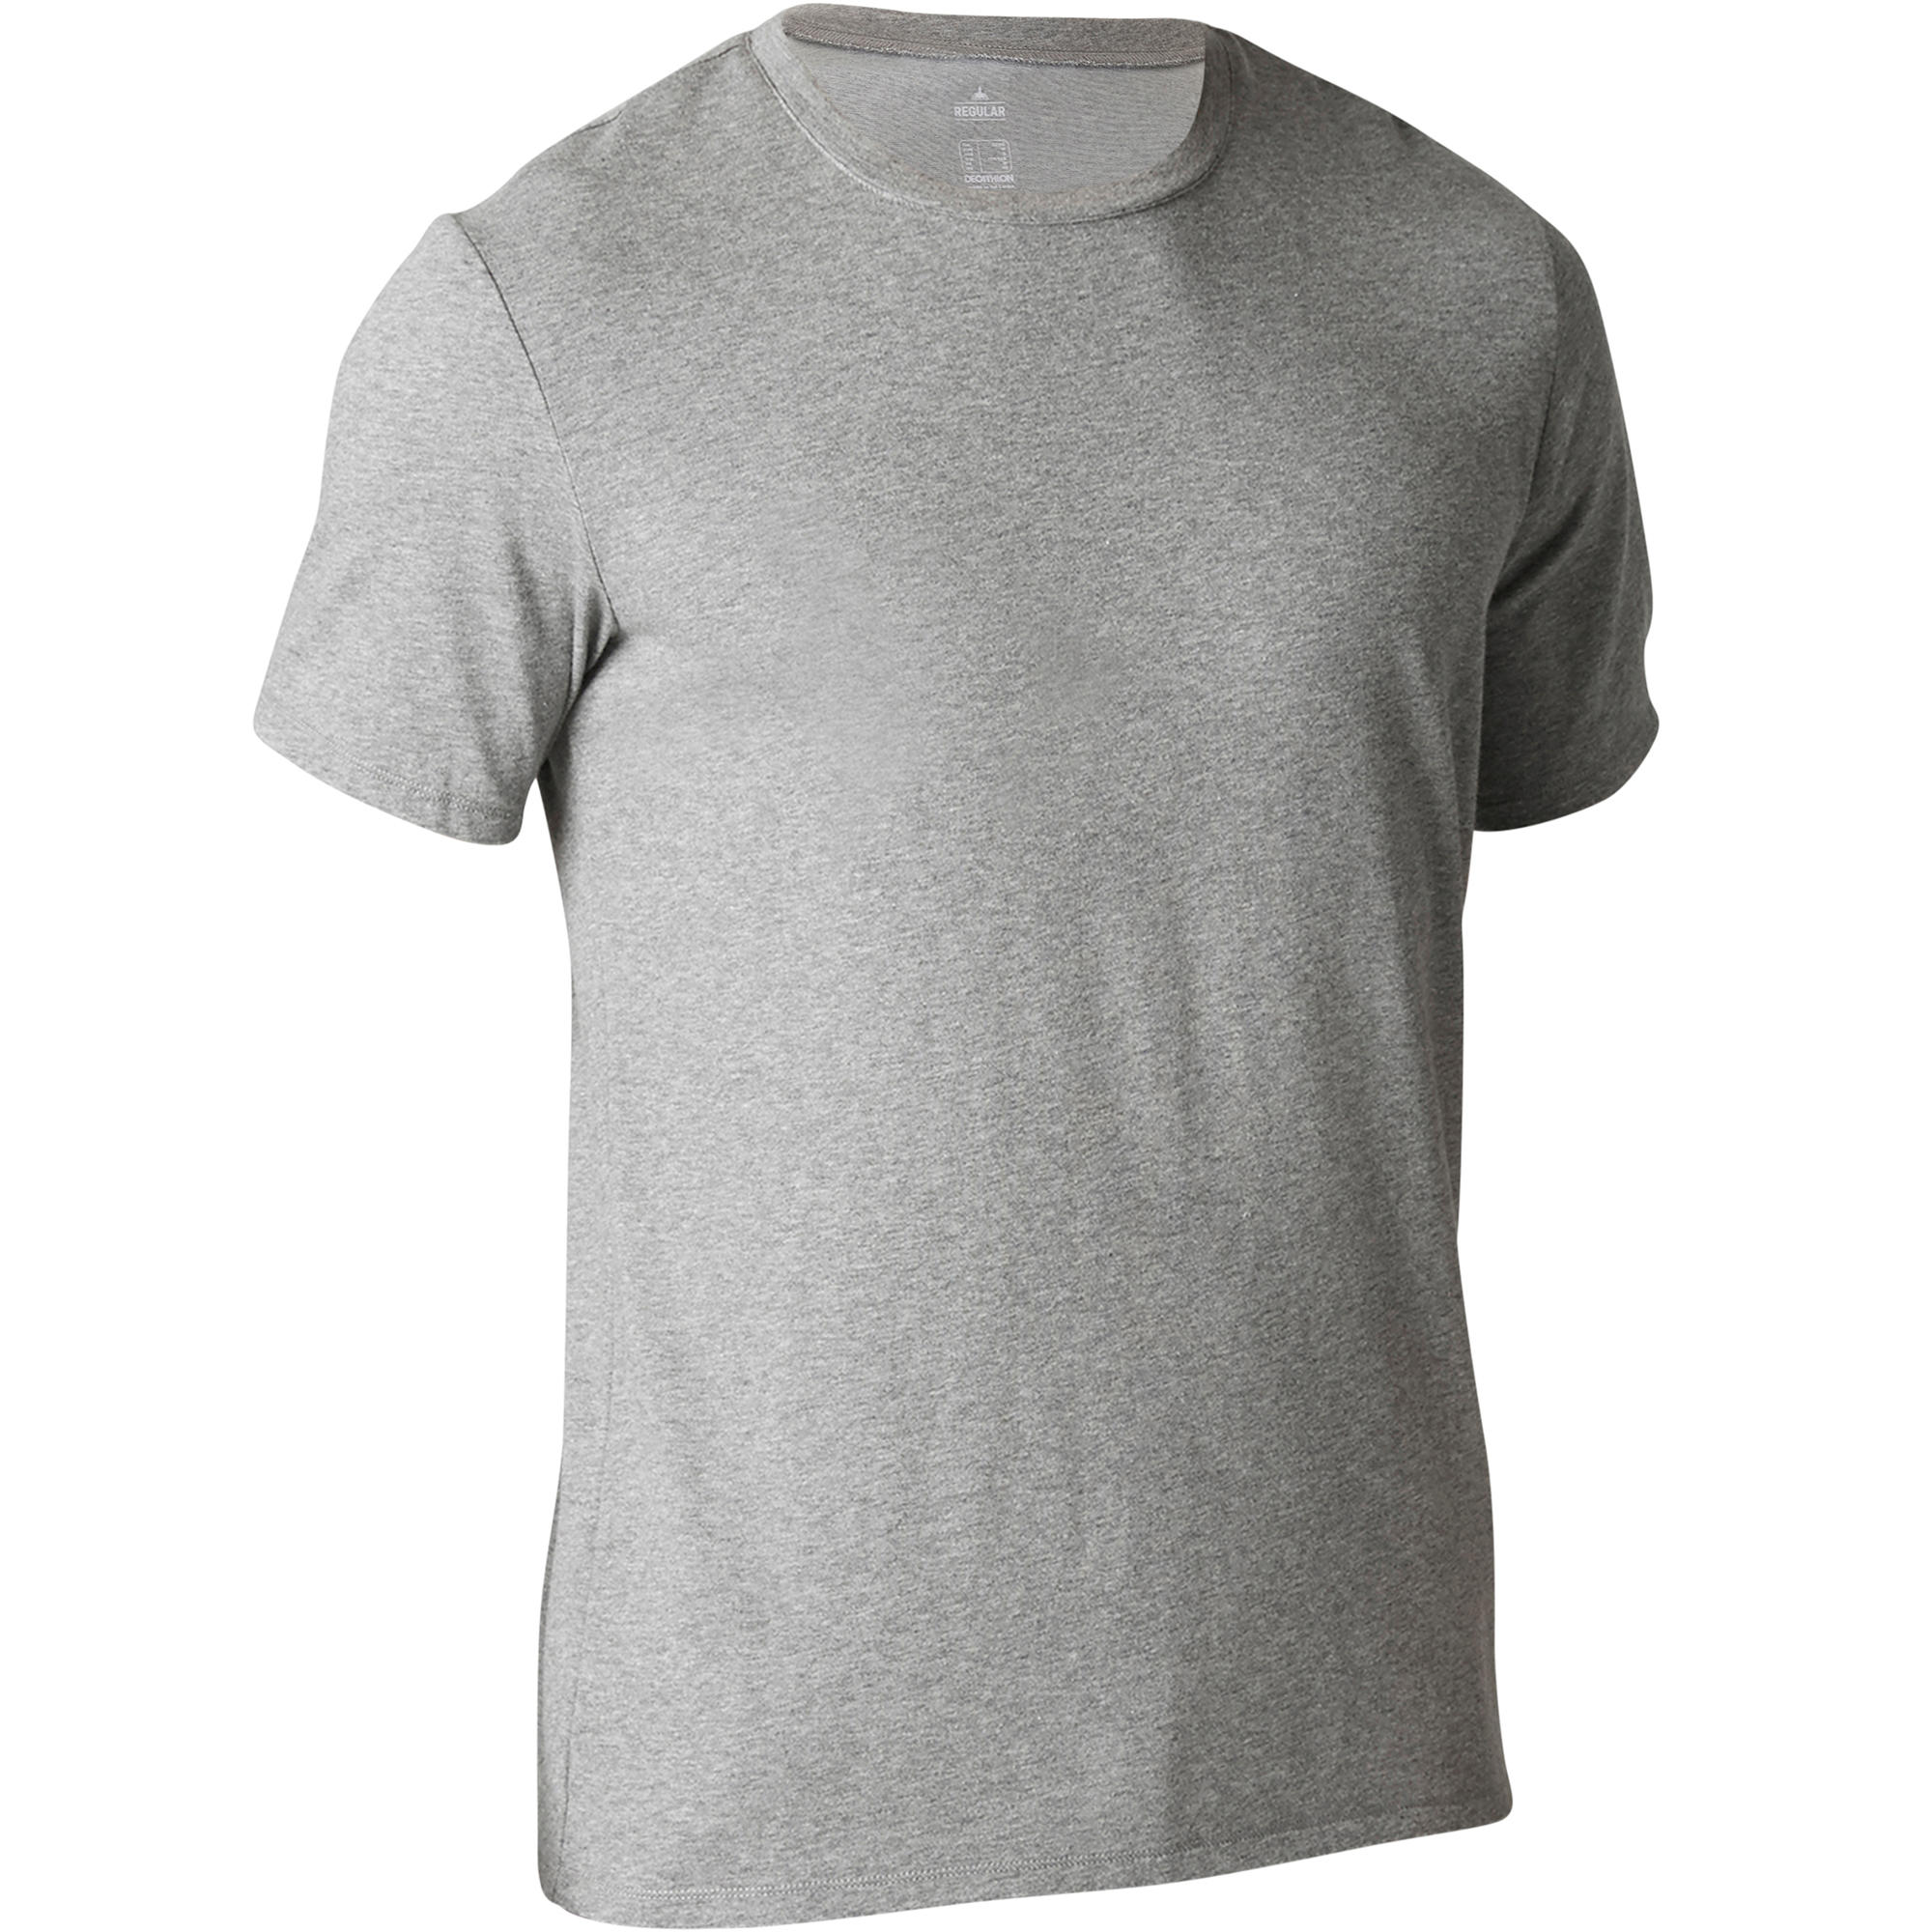 500 Regular-Fit Pilates & Gentle Gym T-Shirt - Mottled Light Grey 1/8